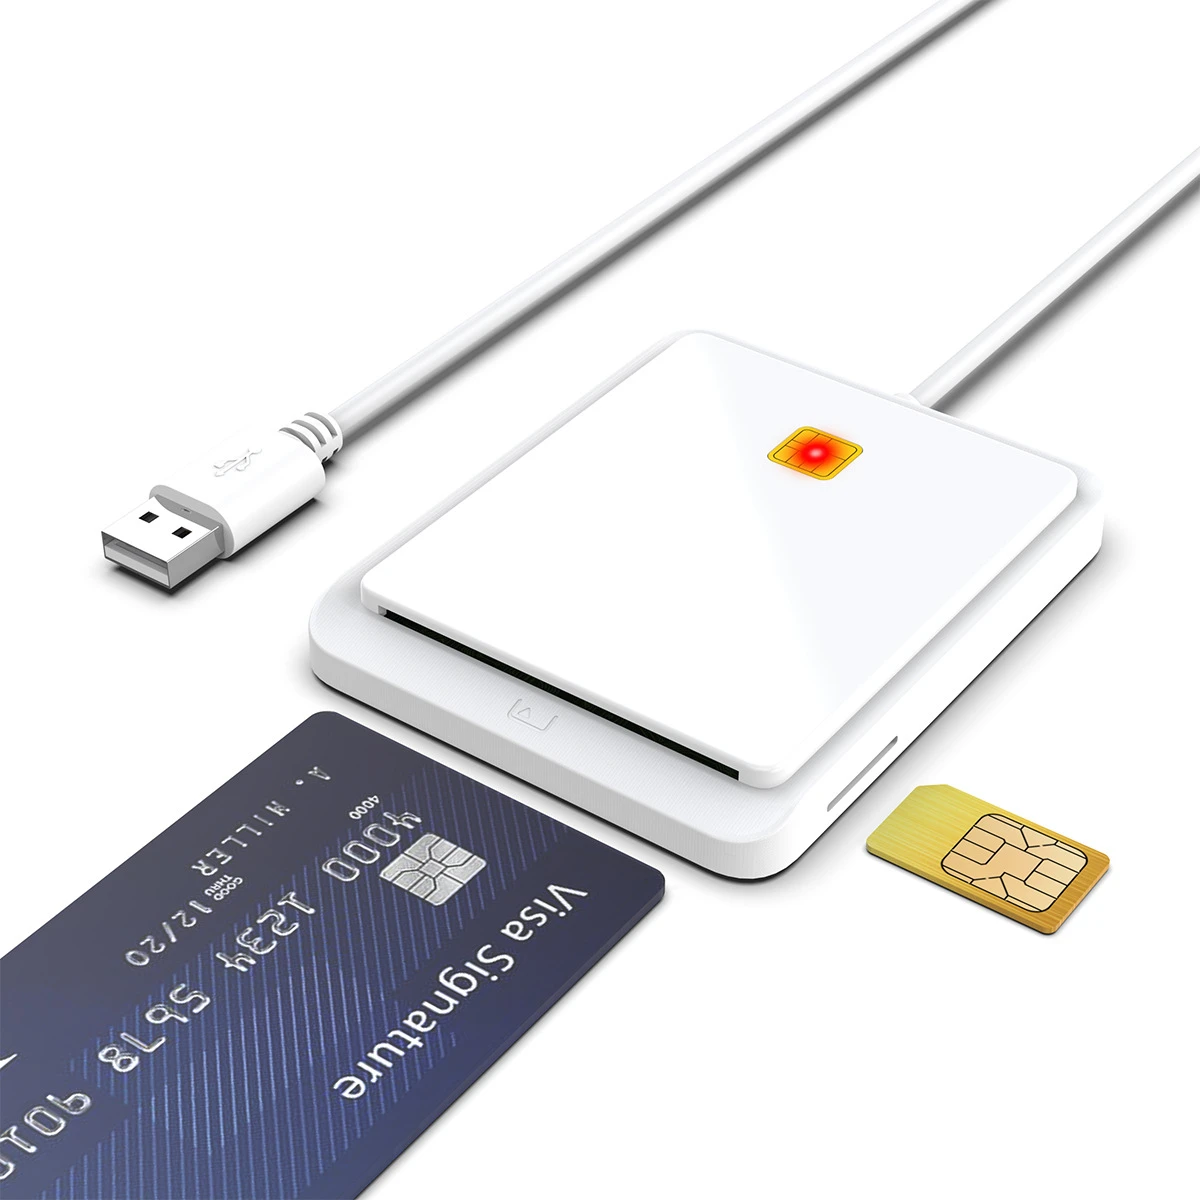 Find Rocketek CR317 Multi function Smart Card Sim Card Reader ABS USB2 0 Card Reader for Mac OS Windows for Sale on Gipsybee.com